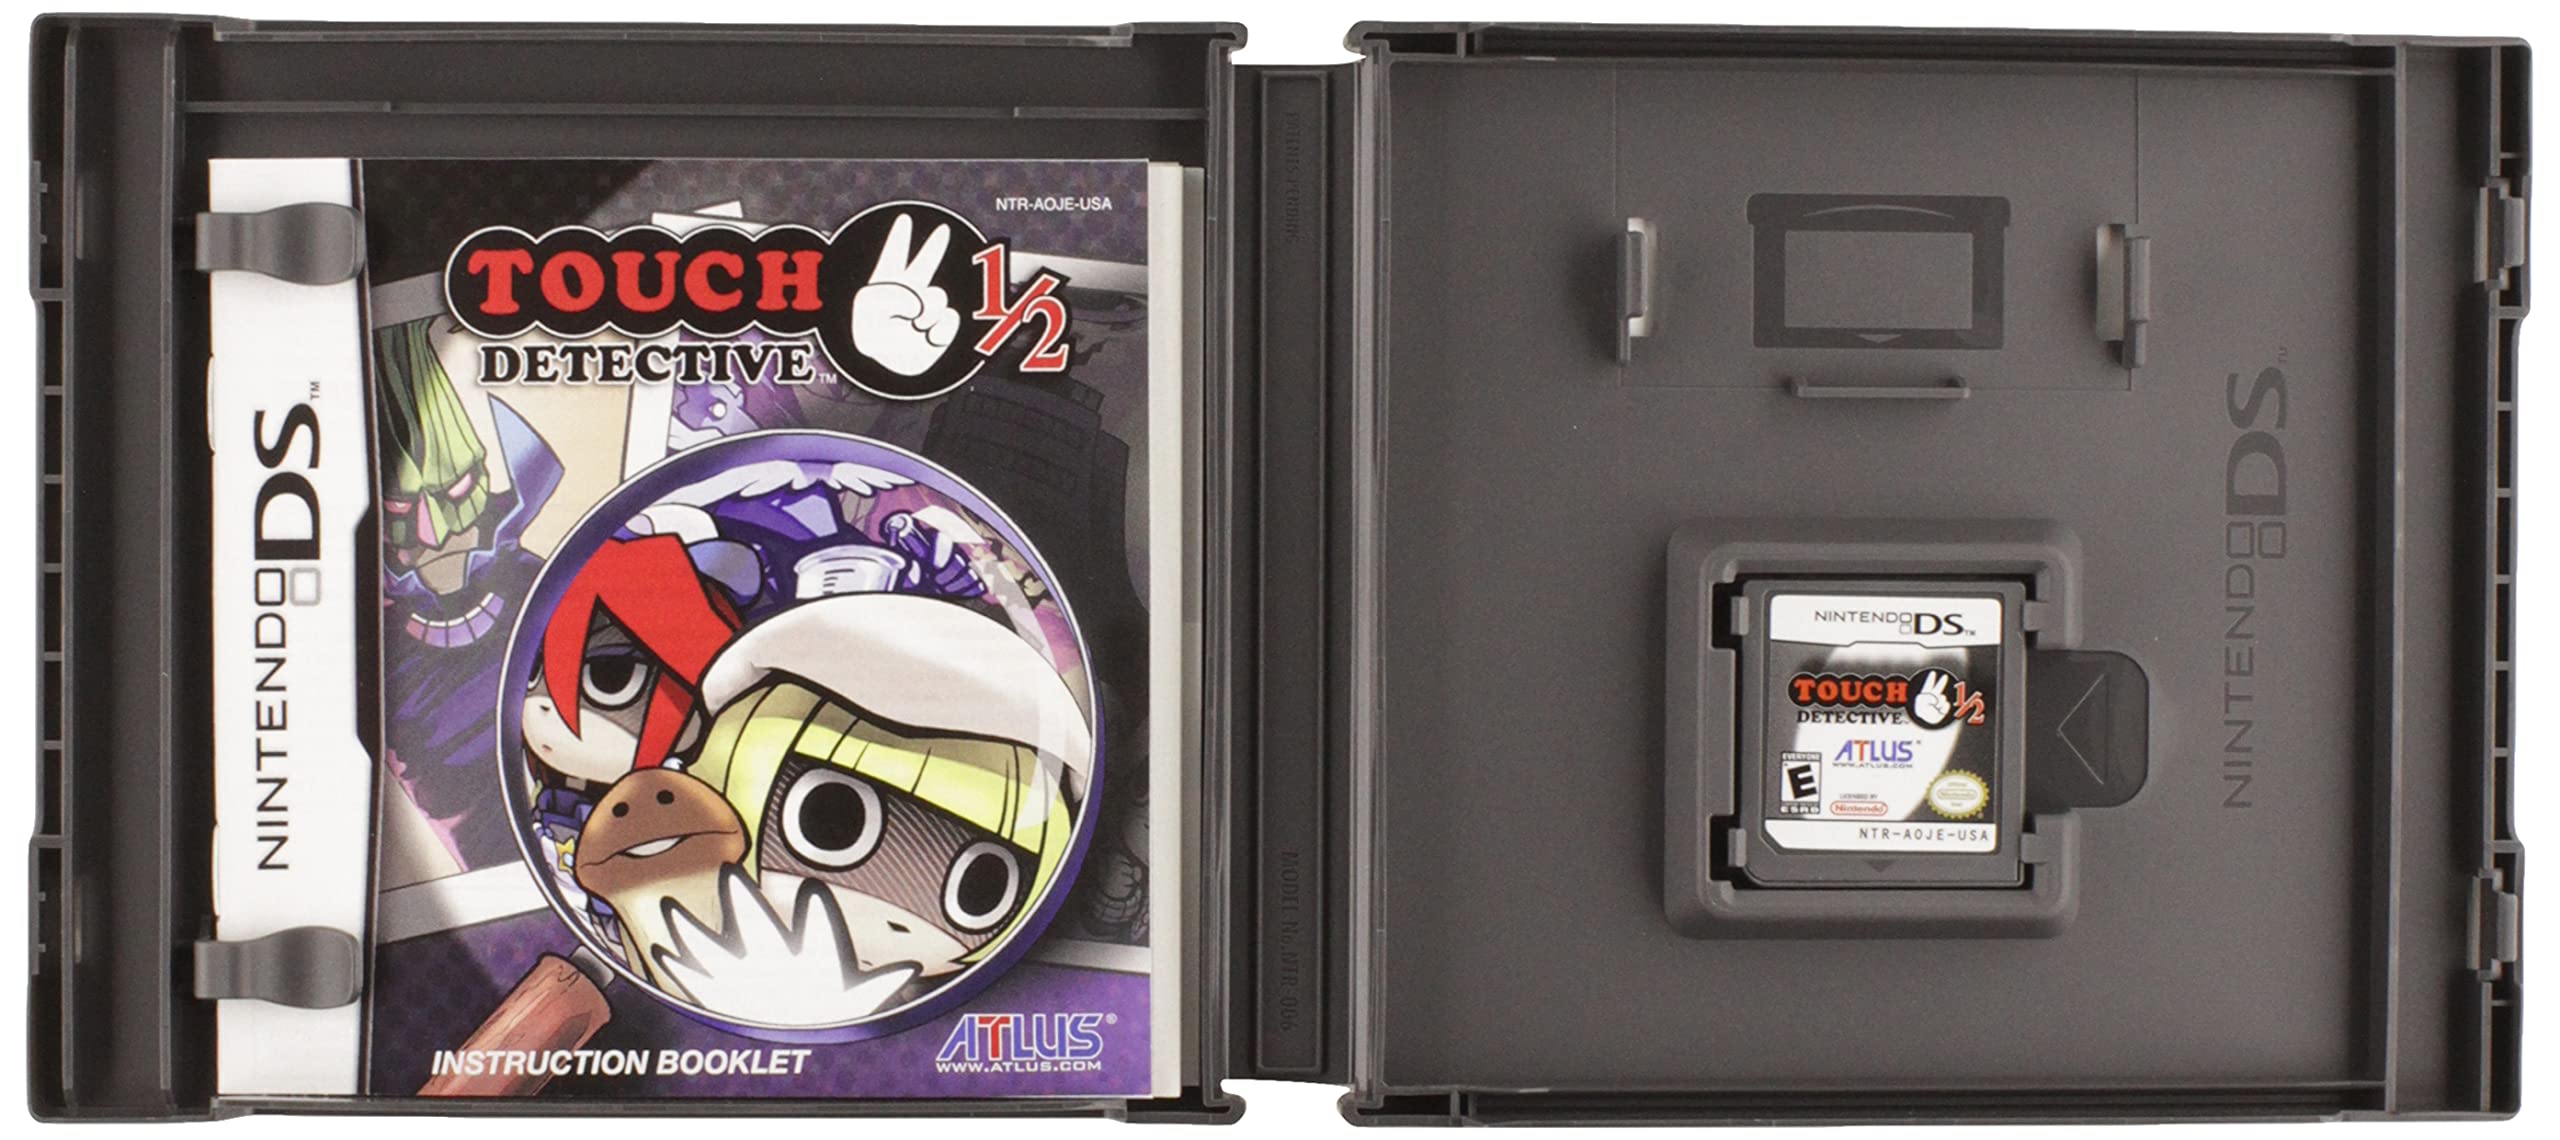 Touch Detective 2 1/2 - Nintendo DS